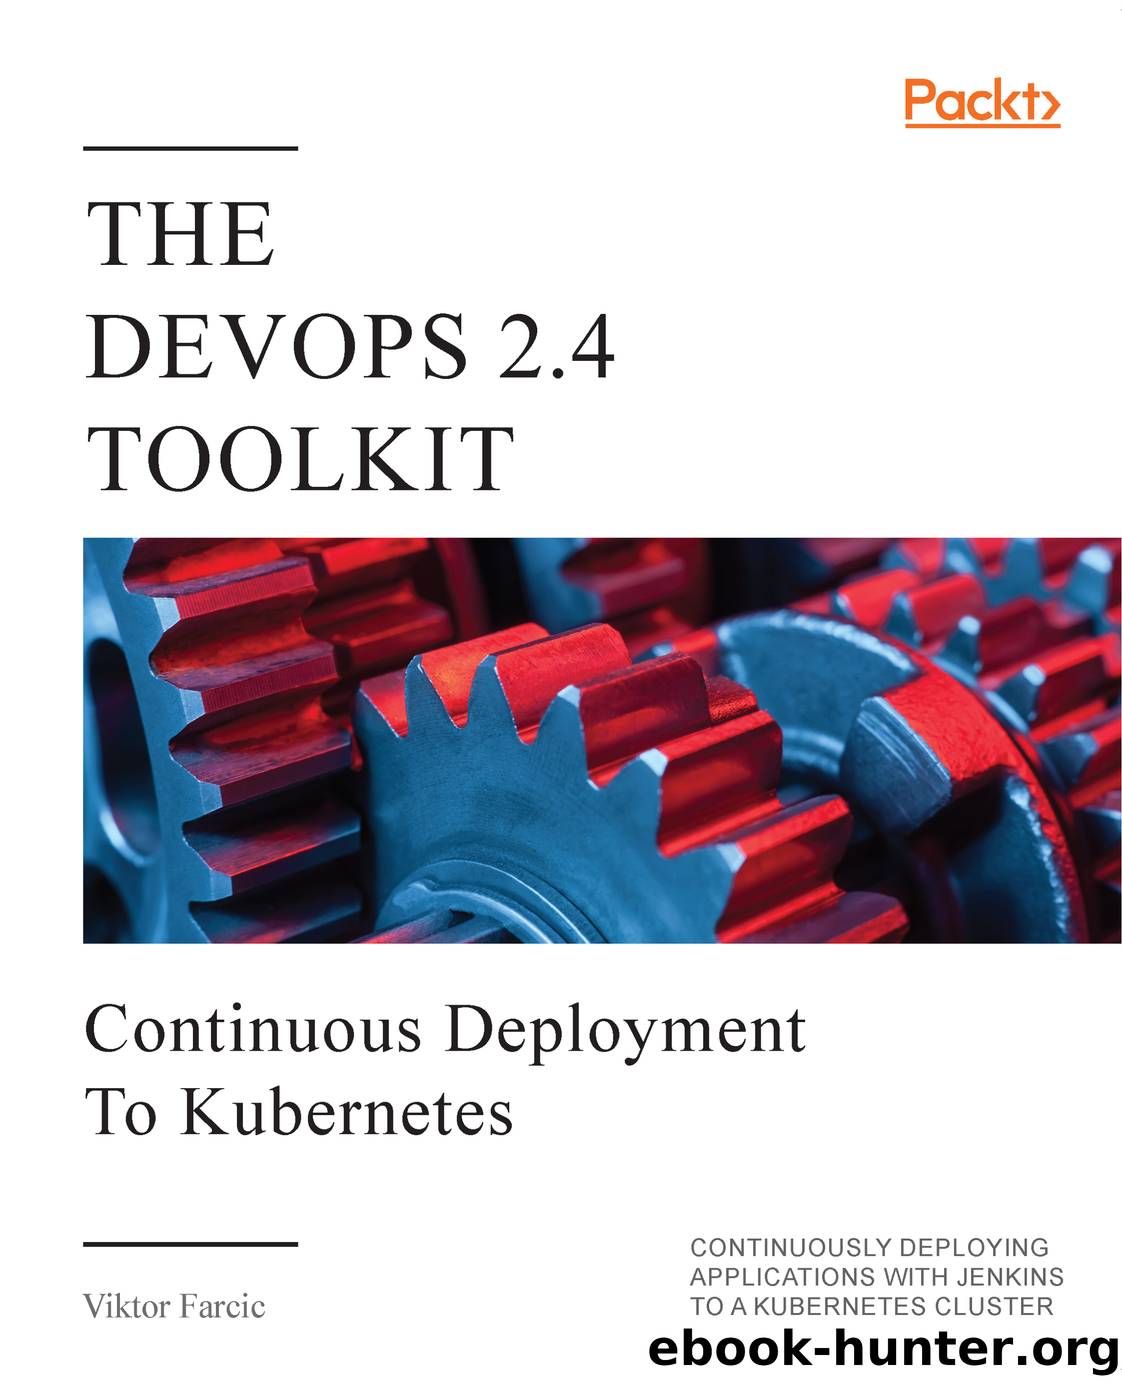 The DevOps 2.4 Toolkit by Viktor Farcic